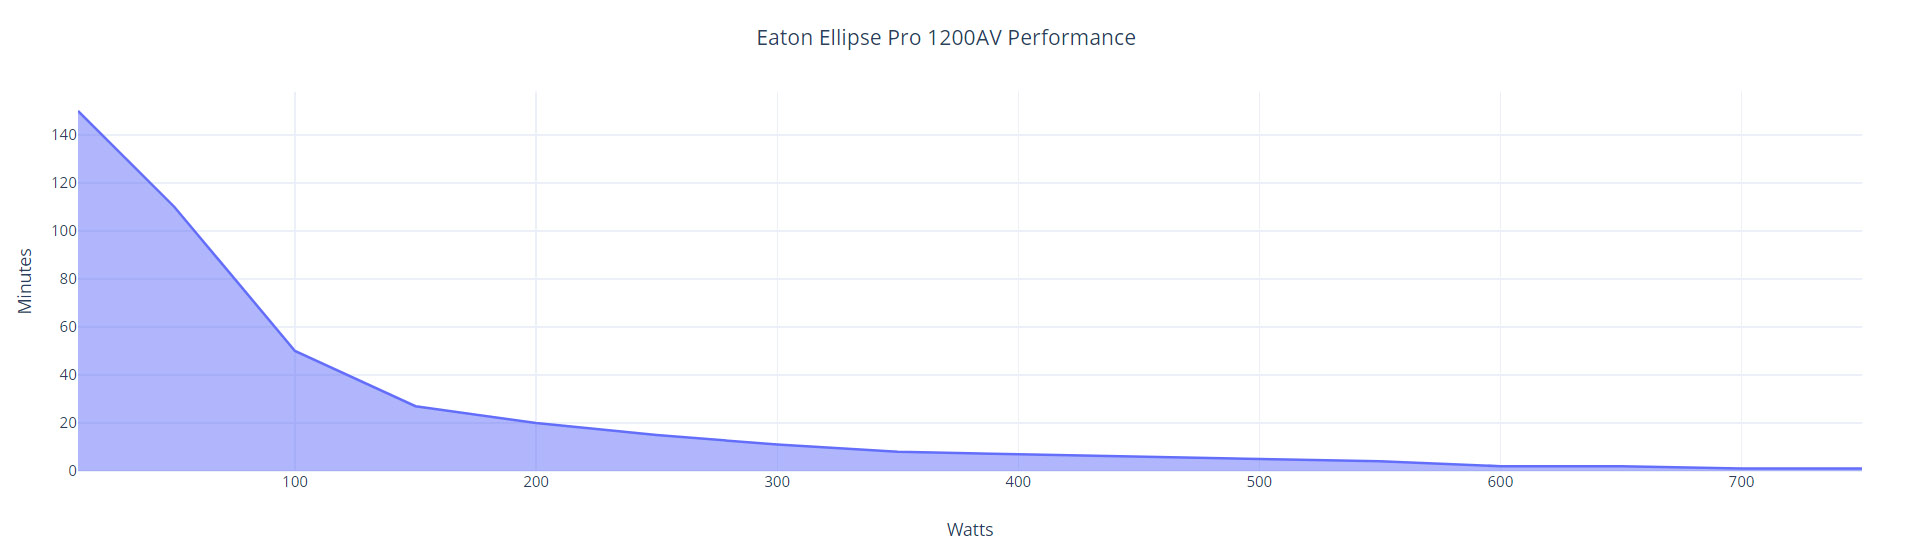 eaton-ellipse-pro-test